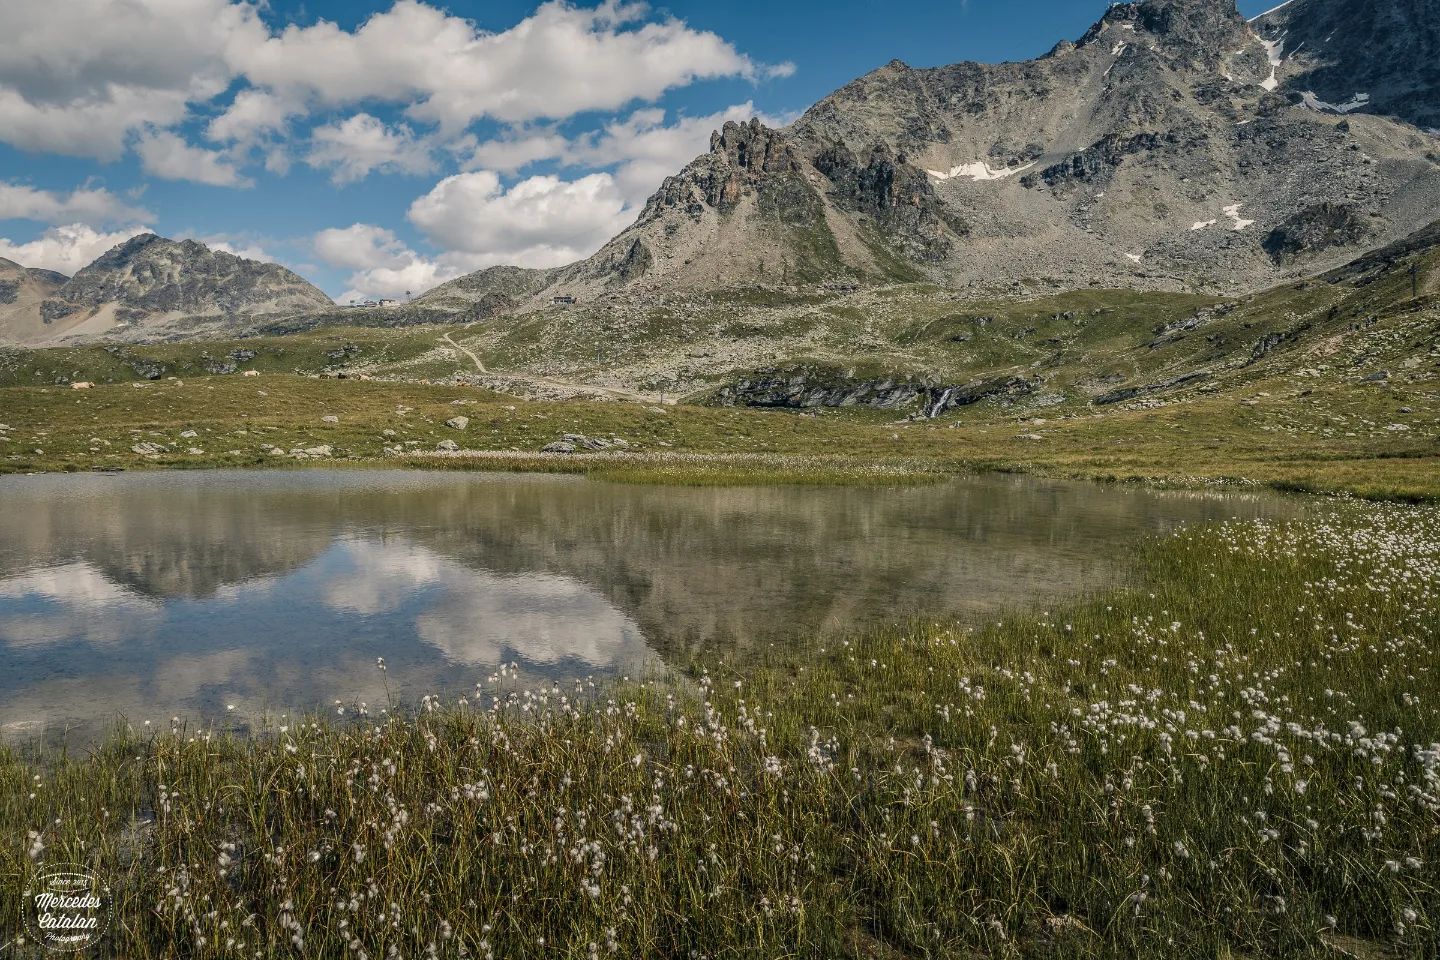 The beauty of alpine lakes
•
•
•
Canon EOS 5d Mark IV + 24-70mm
24mm f/11 1/640sec. ISO250
•
•
#engadin #graubünden #switzerland #exploretocreate #roamtheplanet #moodygrams #exploremore #passionpasport #myswitzerland #lifefolk #feelthealps #beautifuldestinations #anotherescape #sidetrackedmag #rsa_outdoors #lifeofadventure #fotonline_es #rsa_main #thewanderco #swissmountaingirls #swissspots #canonespaña #flyswiss #ifolormoments #inlovewithswitzerland #lifeforthestory #canoninspiration @visualsoflife @roamtheplanet @ourplanetdaily @stayandwander @livefolk @earthpix @earth @helvetic.collective @thewander.co @spotmagazinech